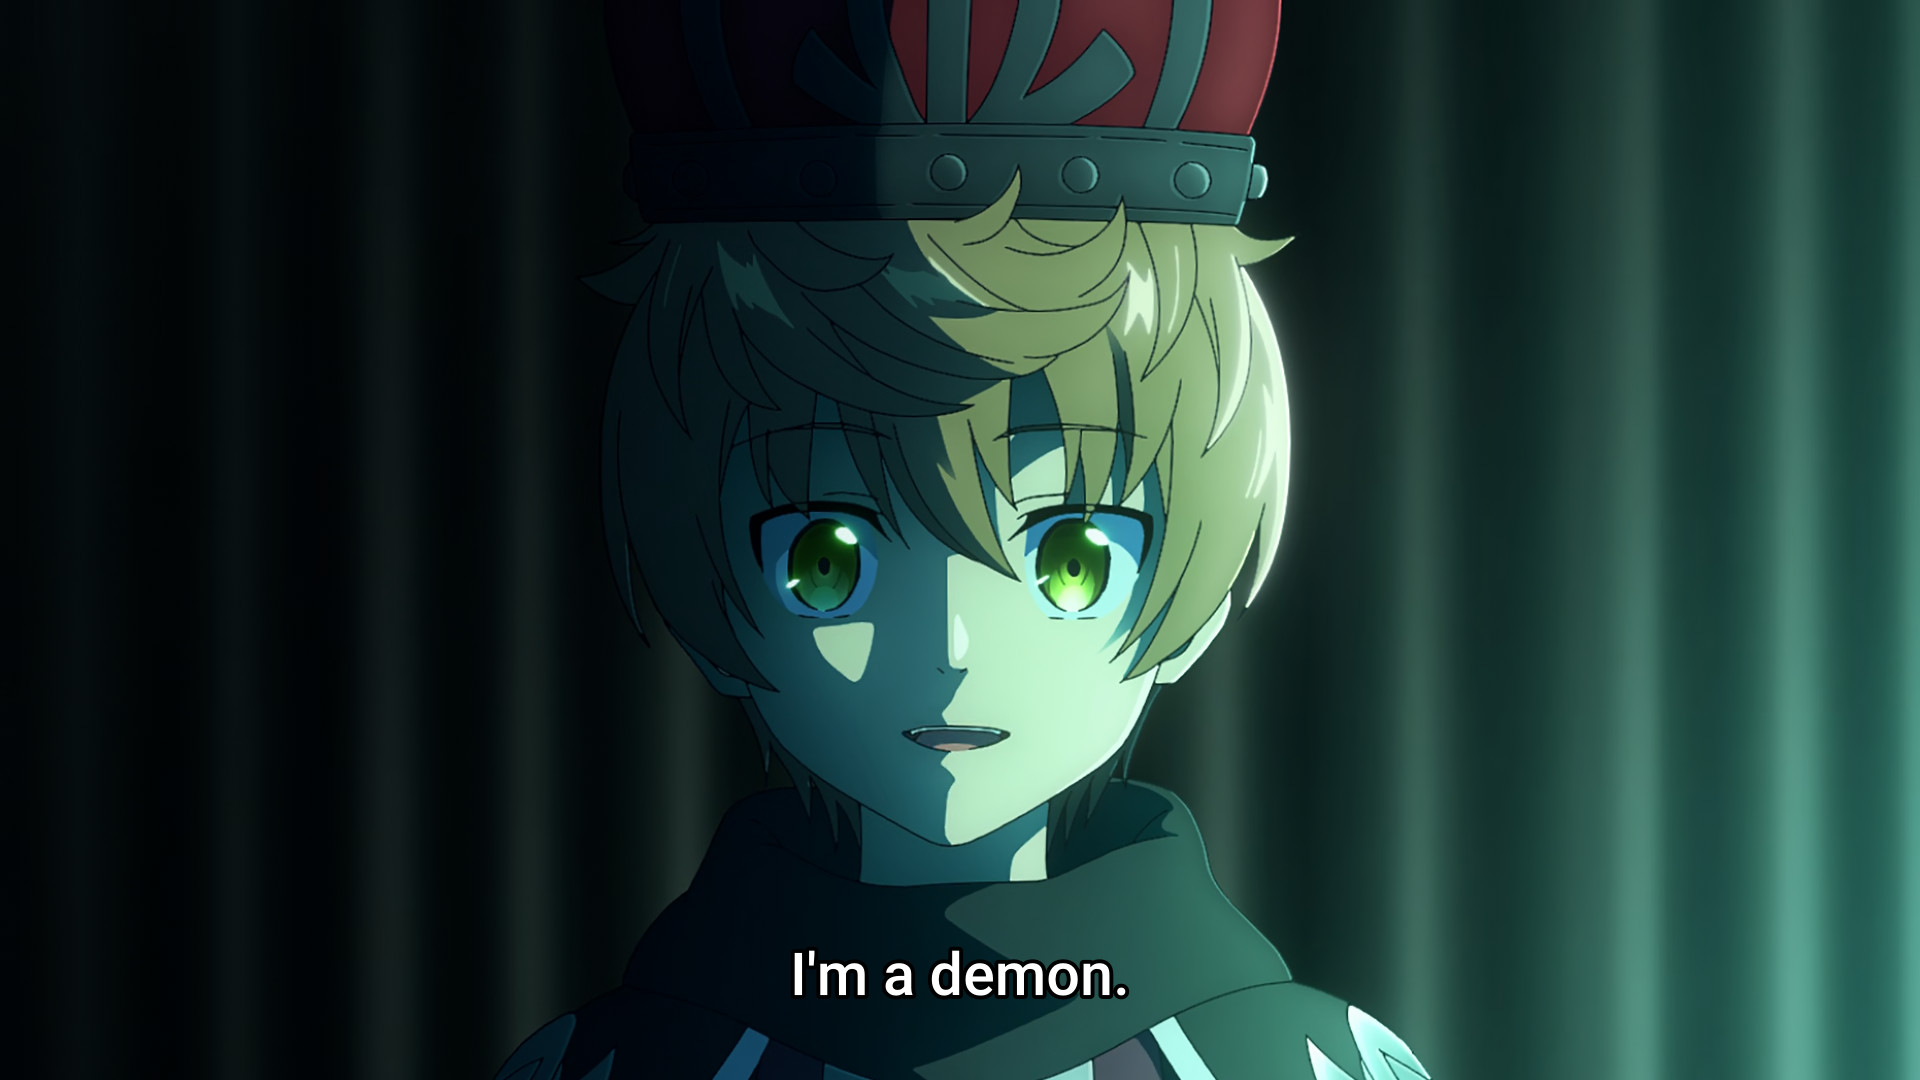 screenshot of demon saying "I am a demon"